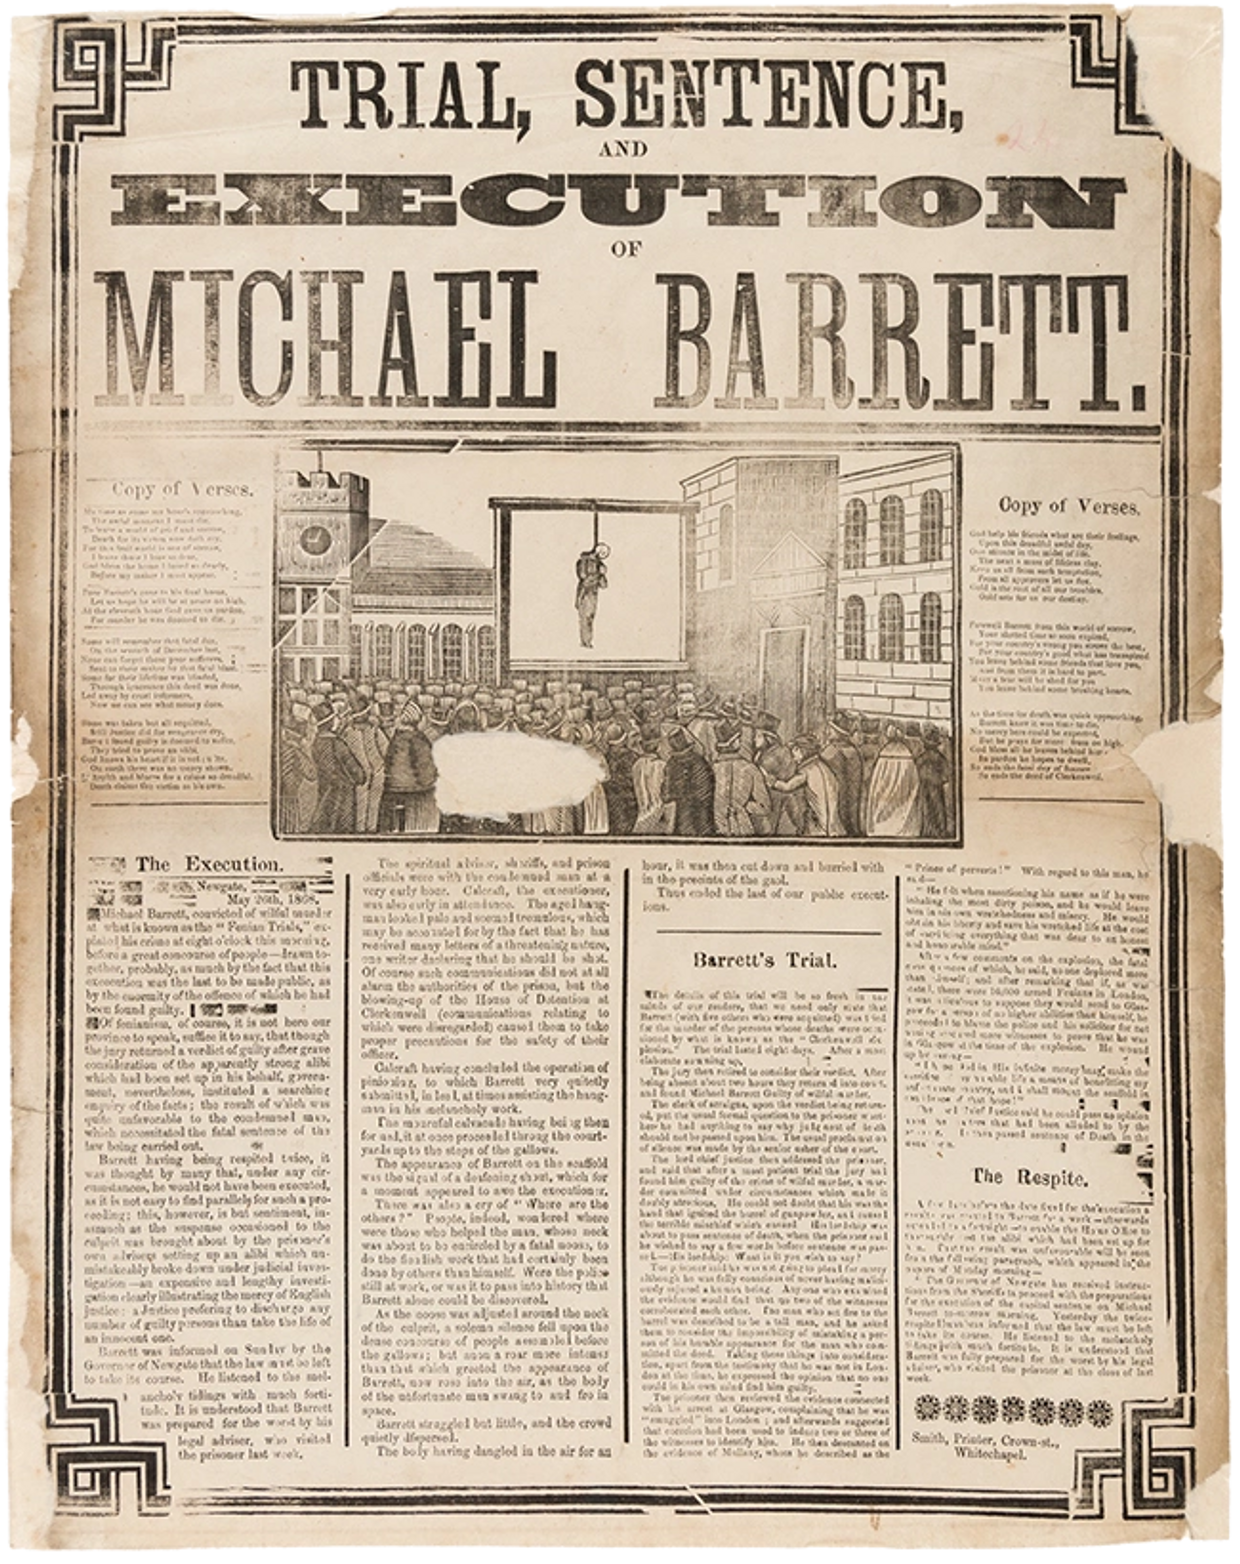 The execution of Michael Barrett